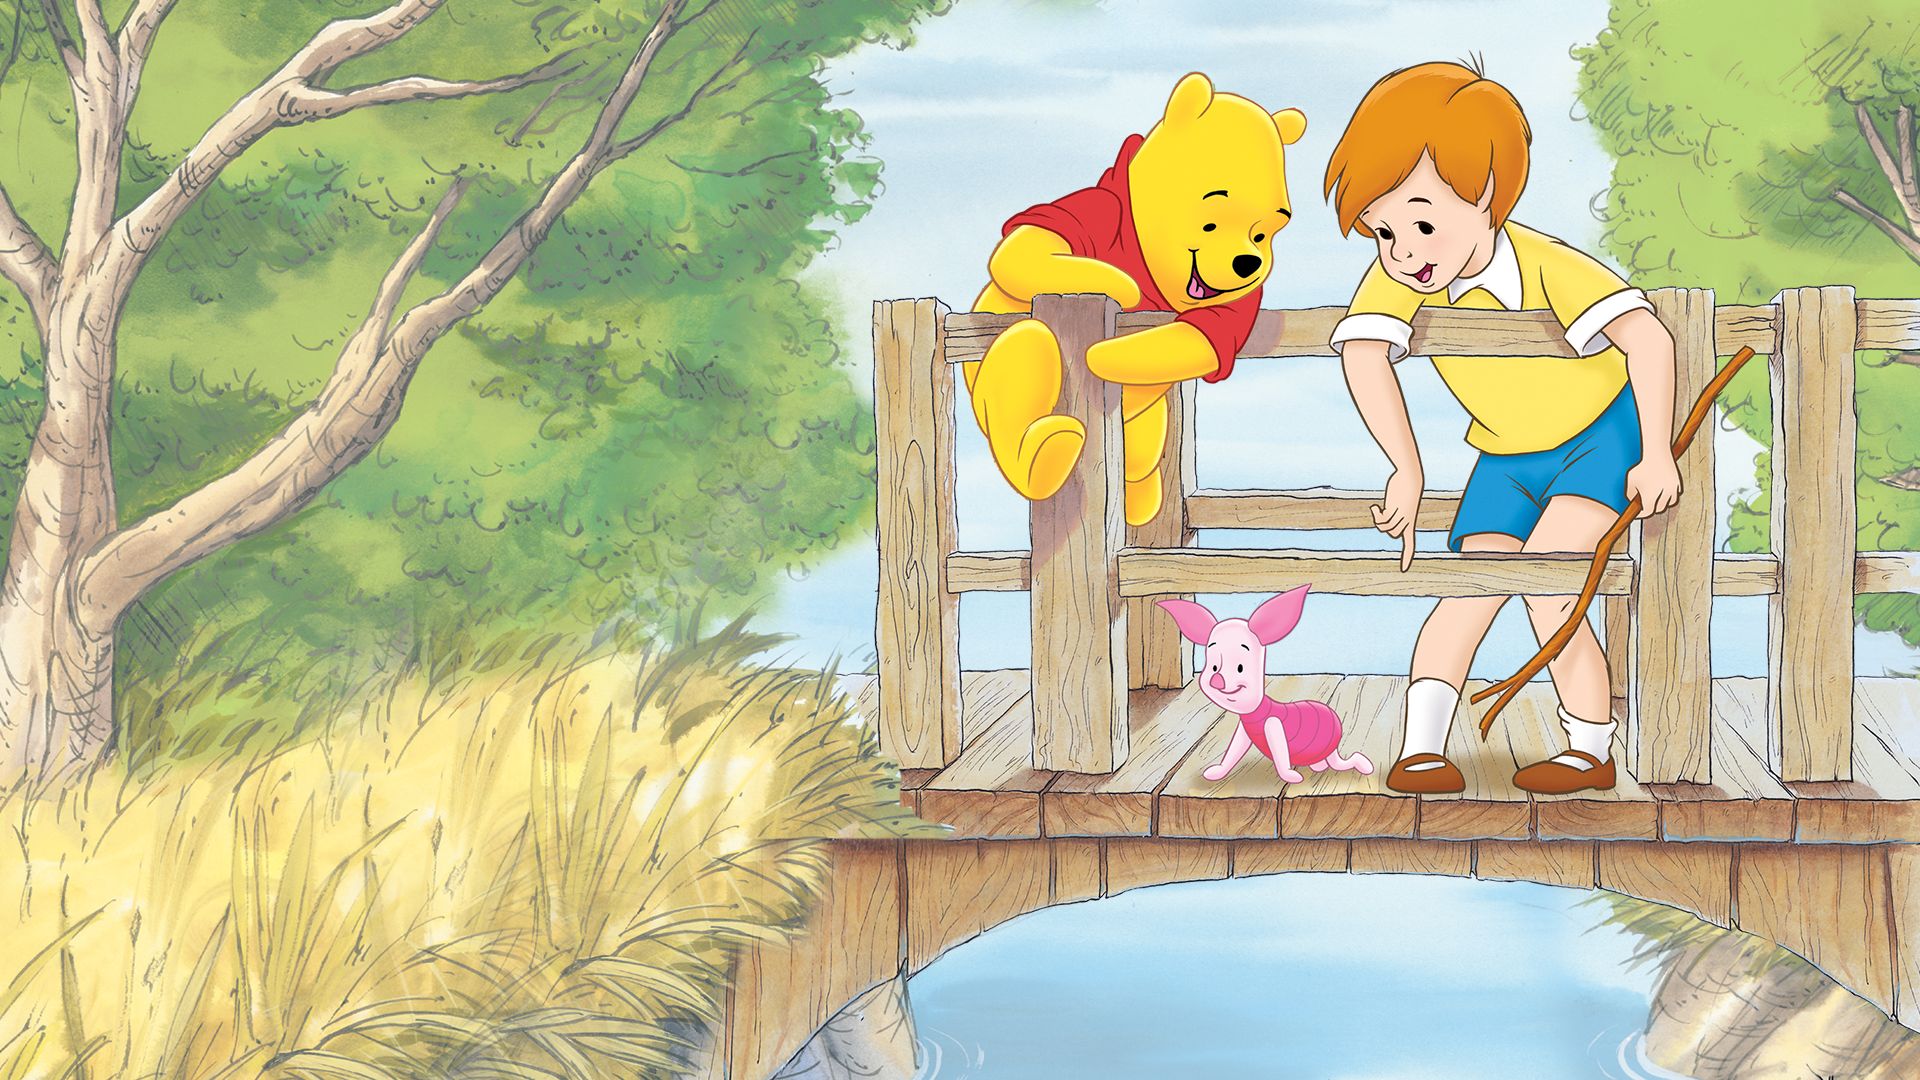 Winnie the pooh adventures. Приключения Винни пуха 1977. Приключения Винни пуха Дисней 1977. Винни пух Дисней 1966.